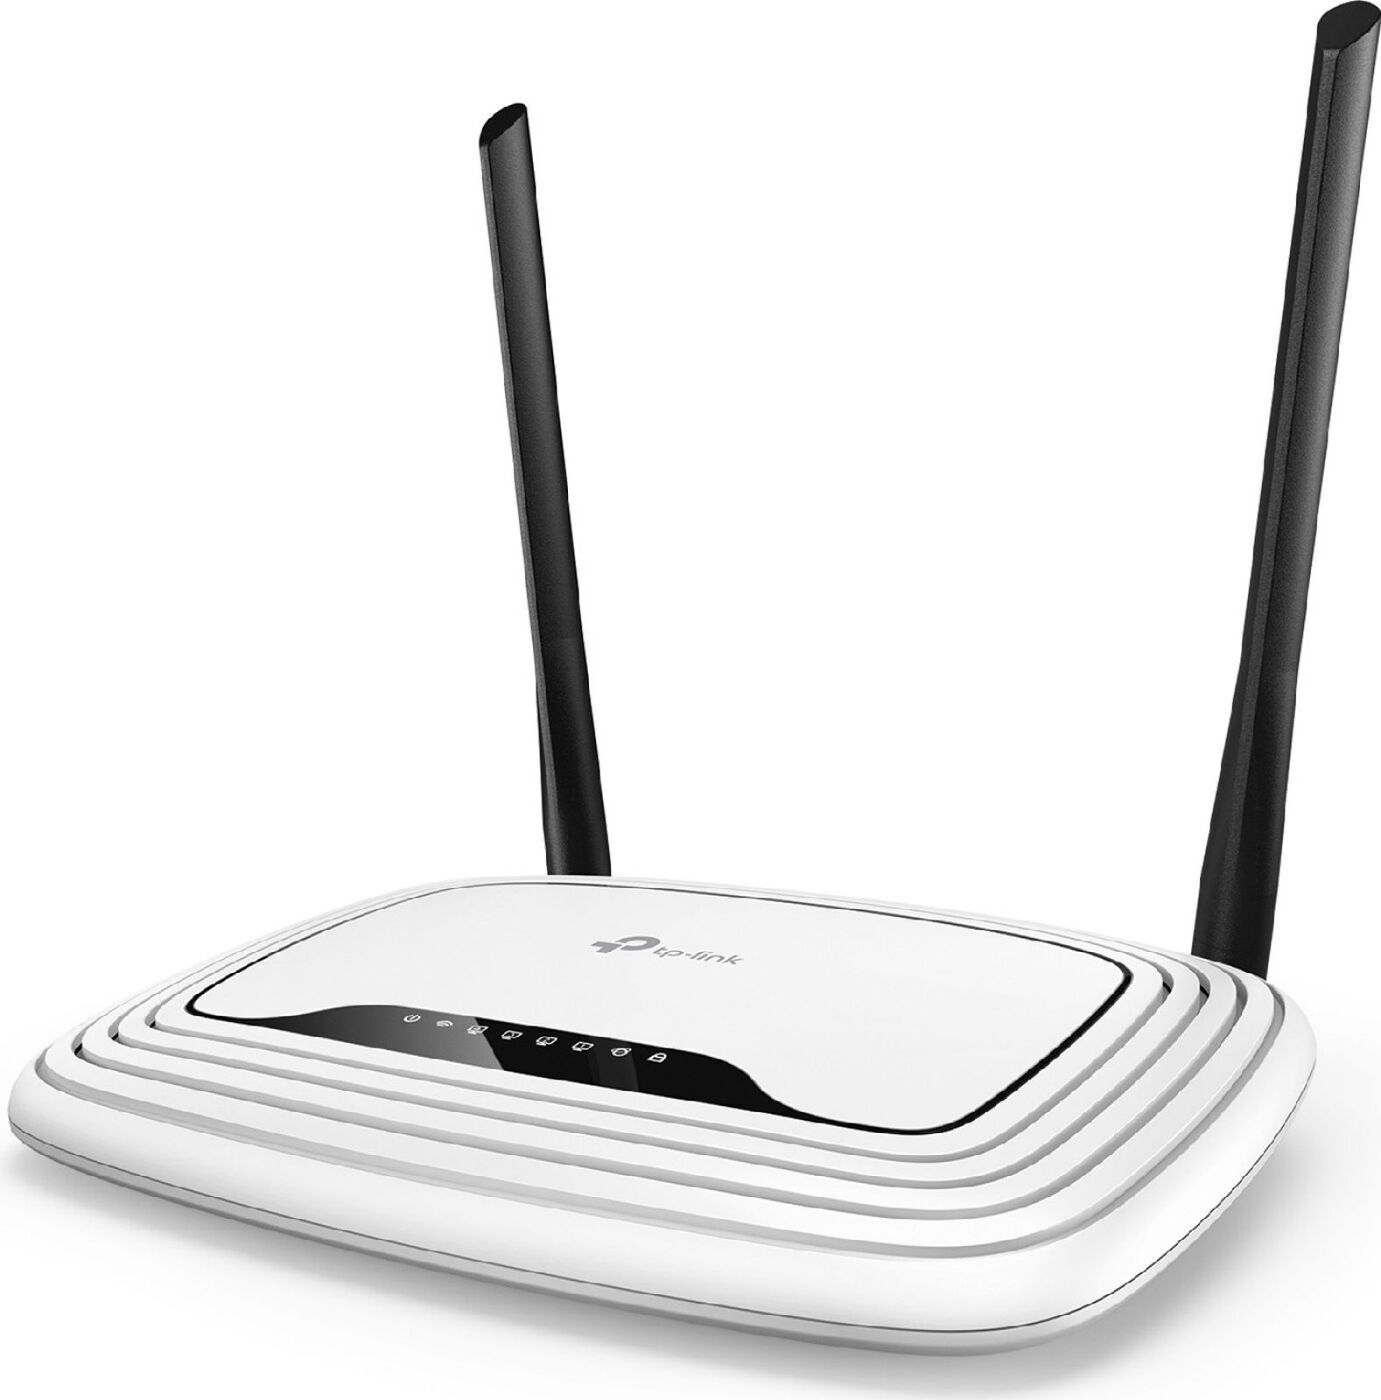 Купить wifi роутер для дома цена. Wi-Fi роутер TP-link TL-wr841n, n300. TP-link TL-wr841n. Wi-Fi роутер TP-link TL-wr842n. TP-link Wireless n Router wr841n.